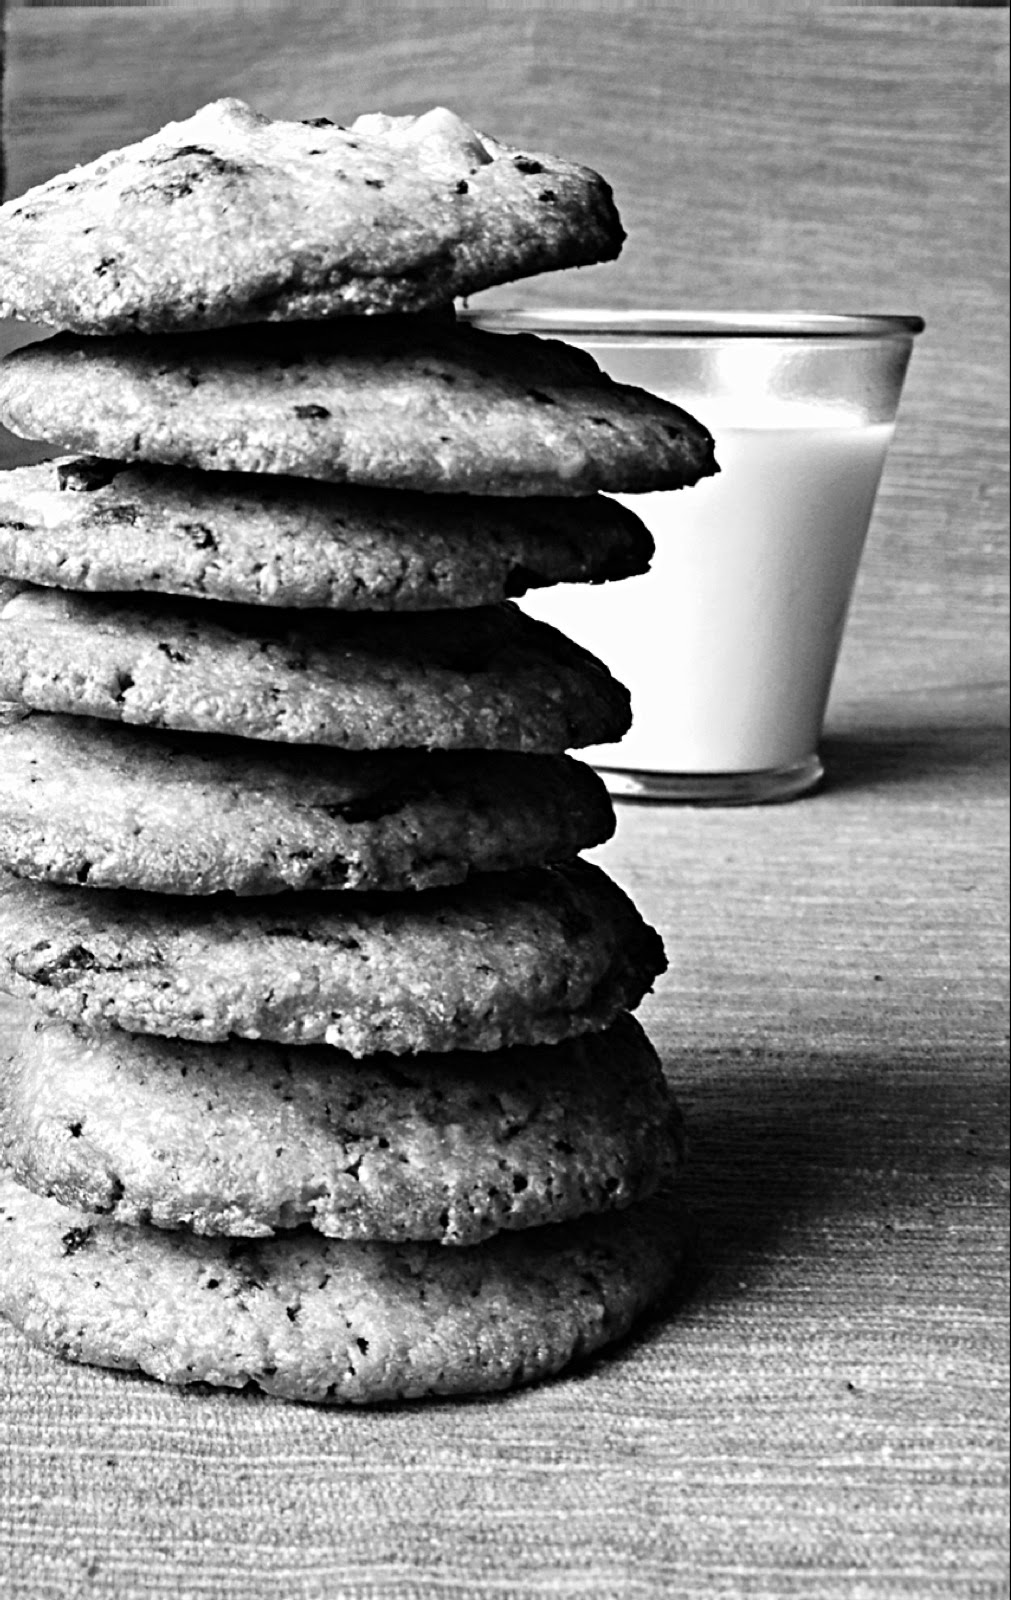 El desayuno americano: Original Toll House Cookies (Chocolate Chip Cookies)